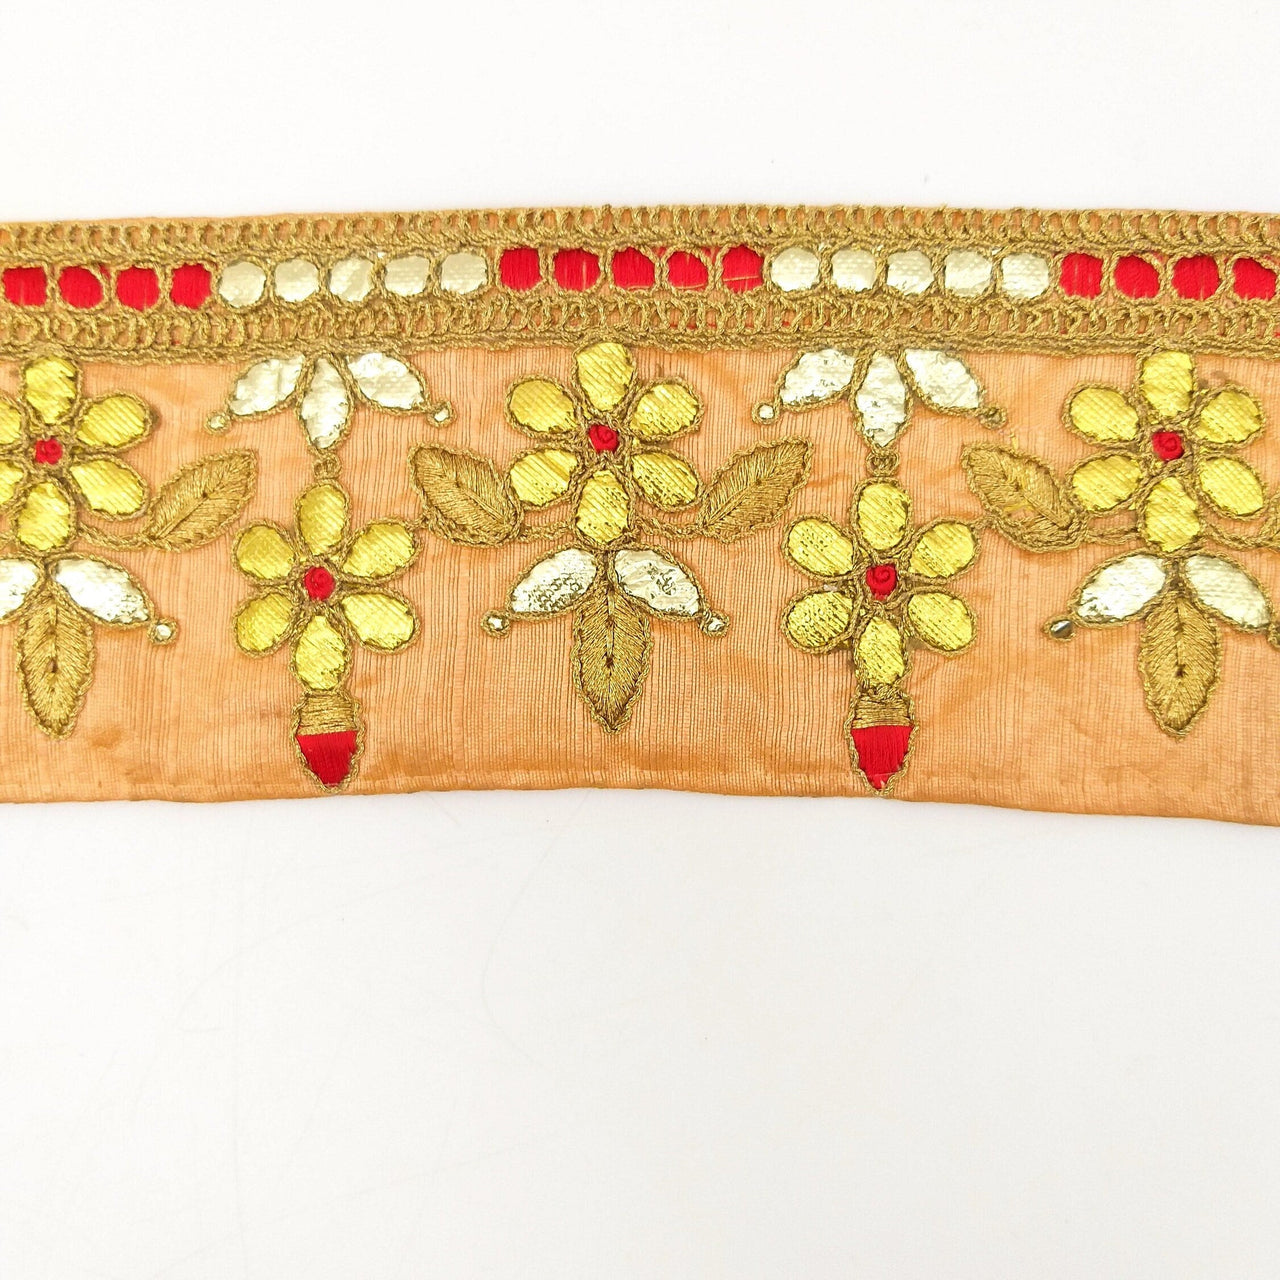 Orange Art Silk Fabric Trim, Red & Gold Floral Embroidery Gota Patti Indian Sari Border Trim By Yard Decorative Trim Craft Lace